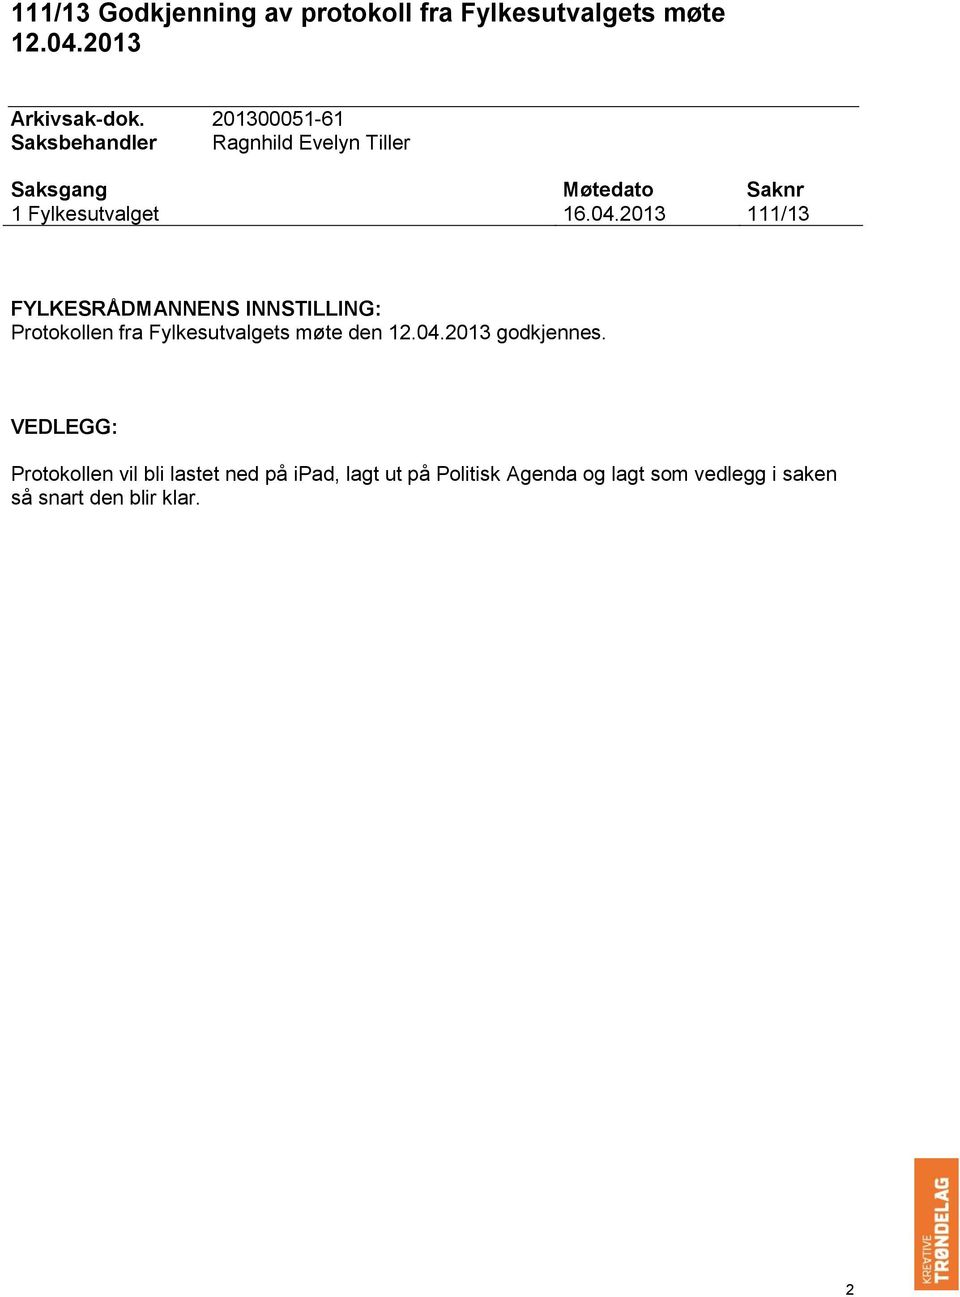 2013 111/13 FYLKESRÅDMANNENS INNSTILLING: Protokollen fra Fylkesutvalgets møte den 12.04.